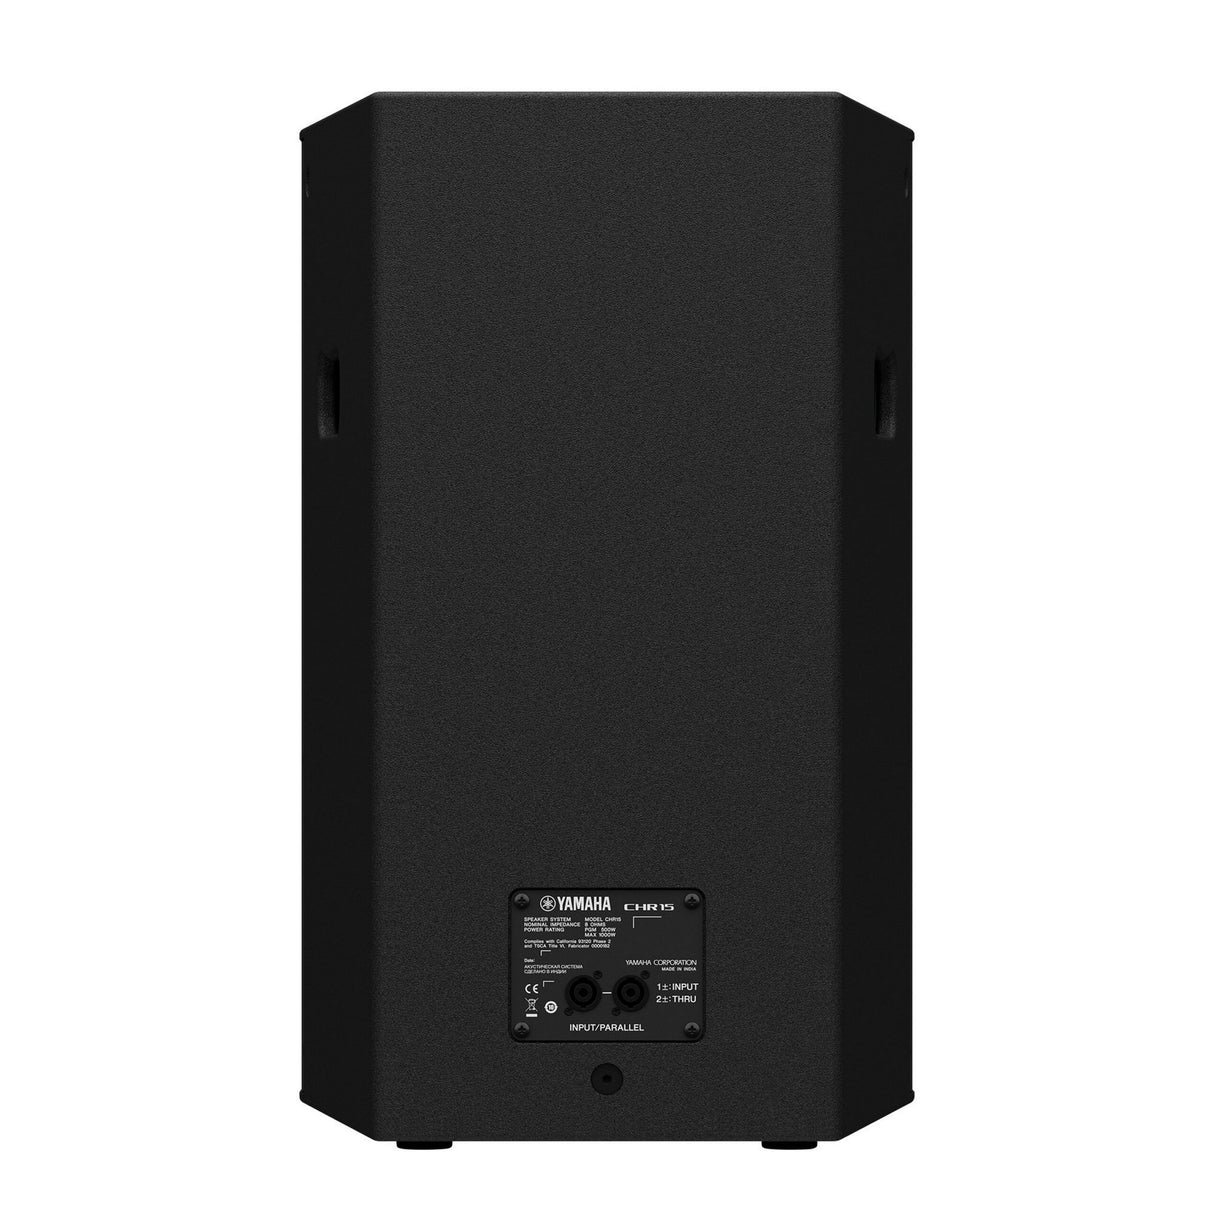 Yamaha CHR15 2-Way Passive Loudspeaker System, 15 Inch